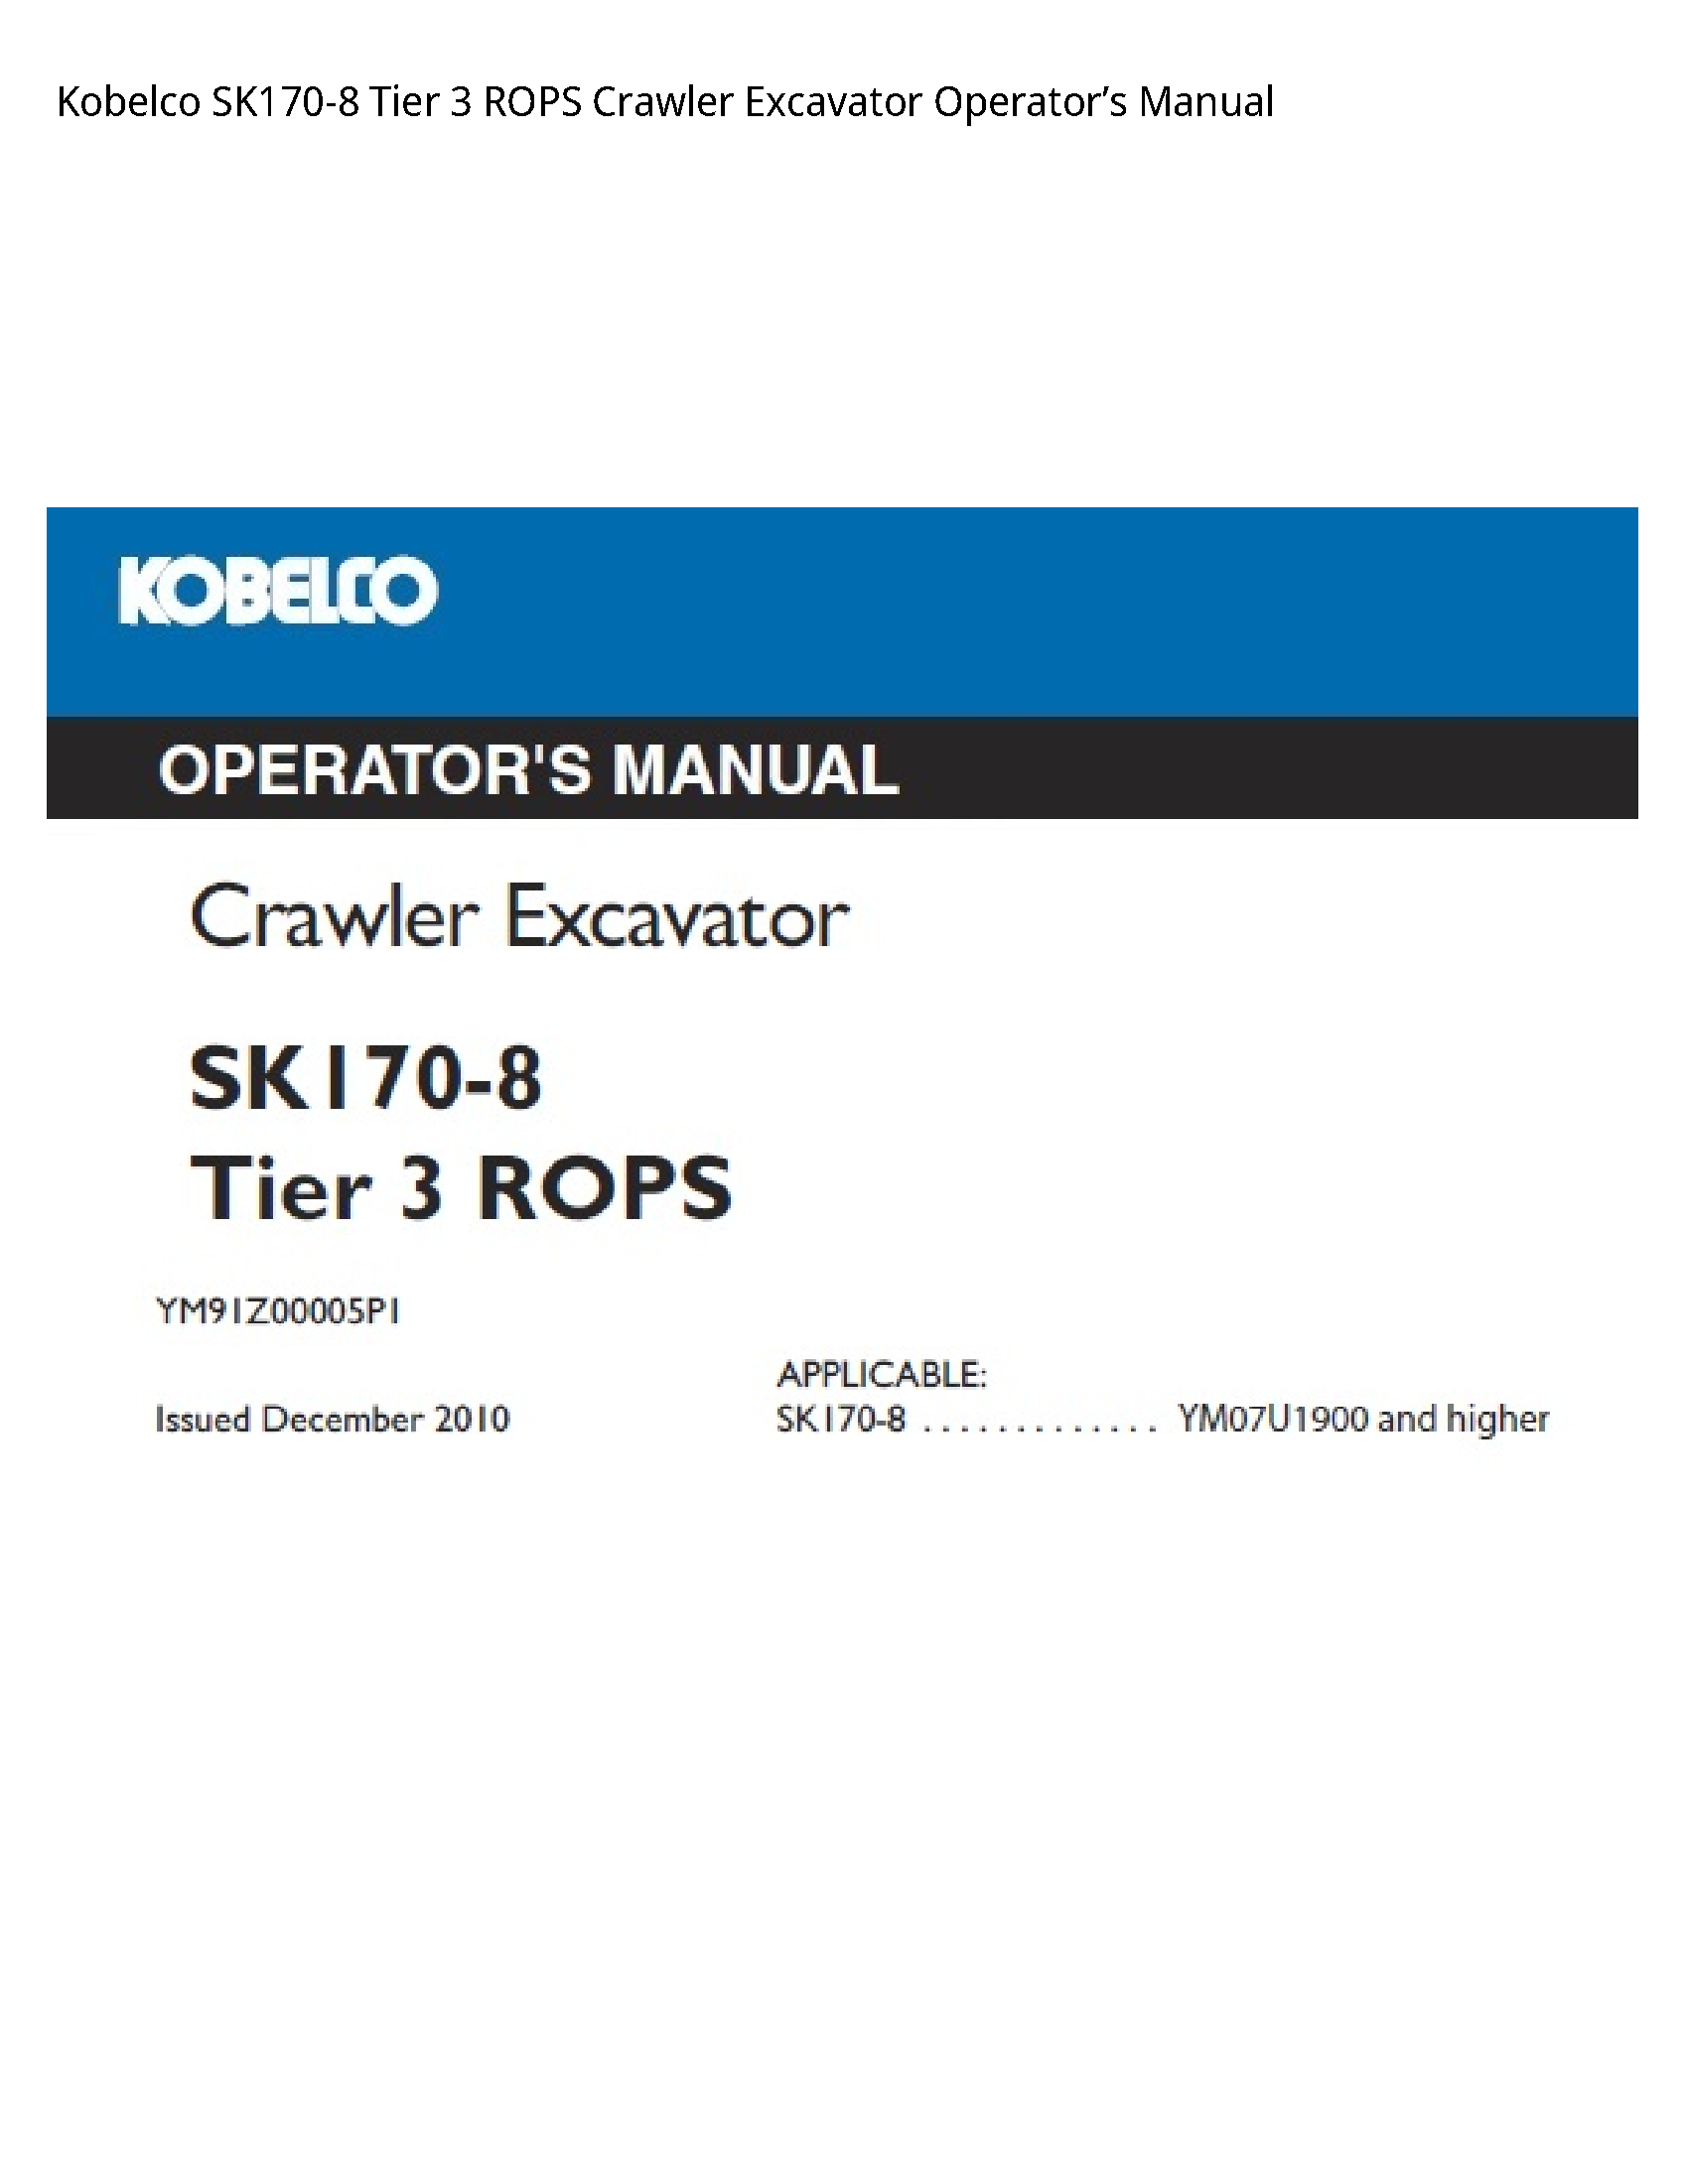 Kobelco SK170-8 Tier ROPS Crawler Excavator Operator’s manual